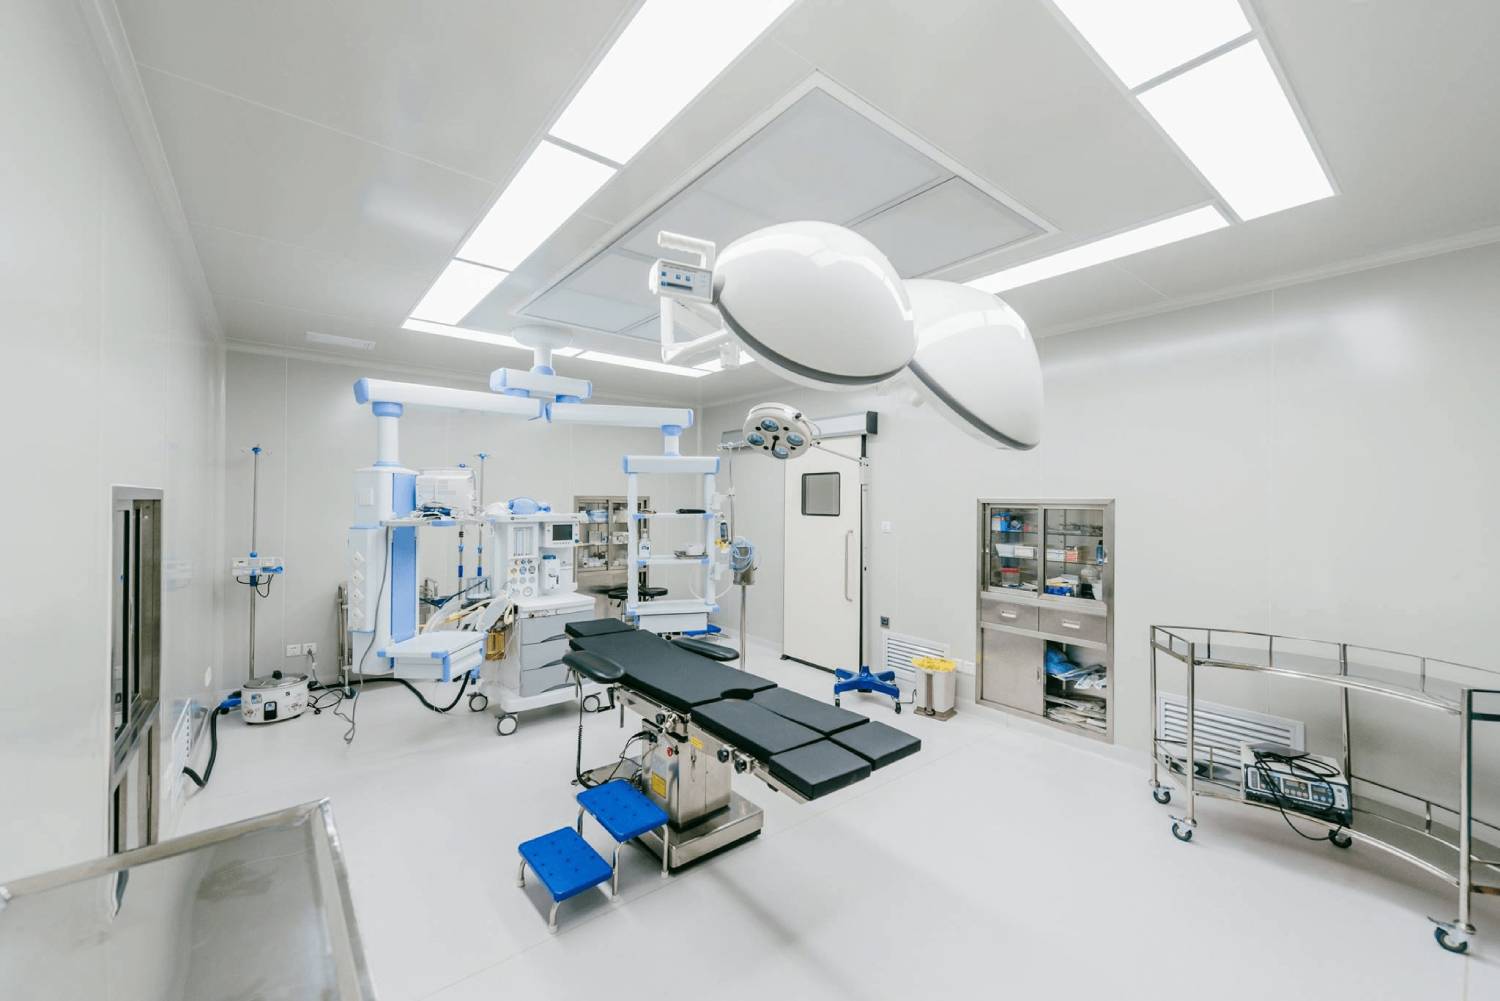 Operating Room Medwish